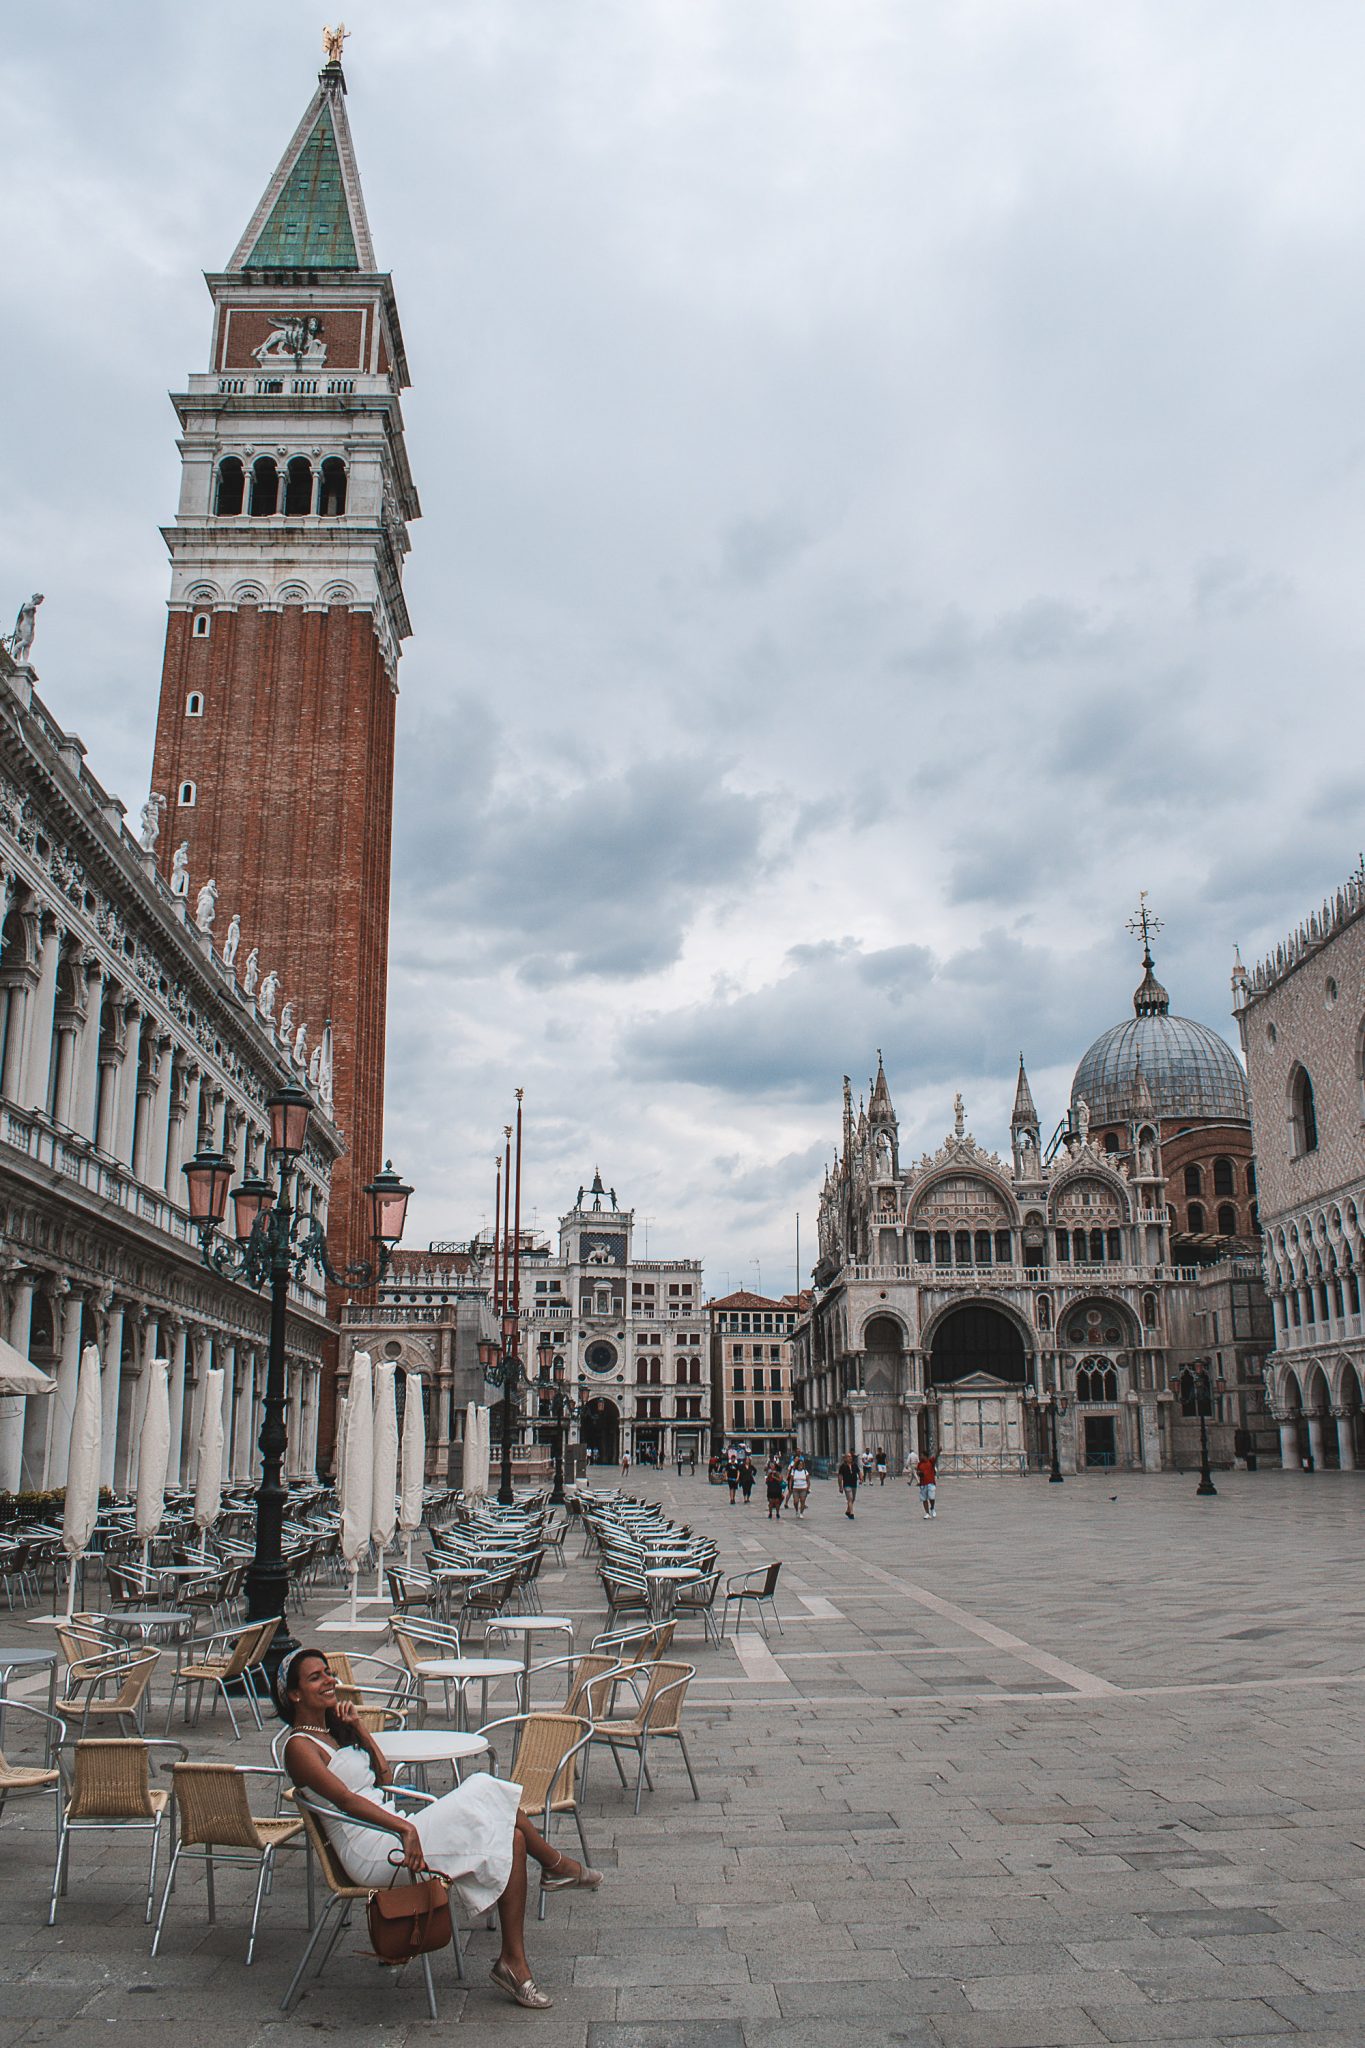 Onde ficar em Veneza